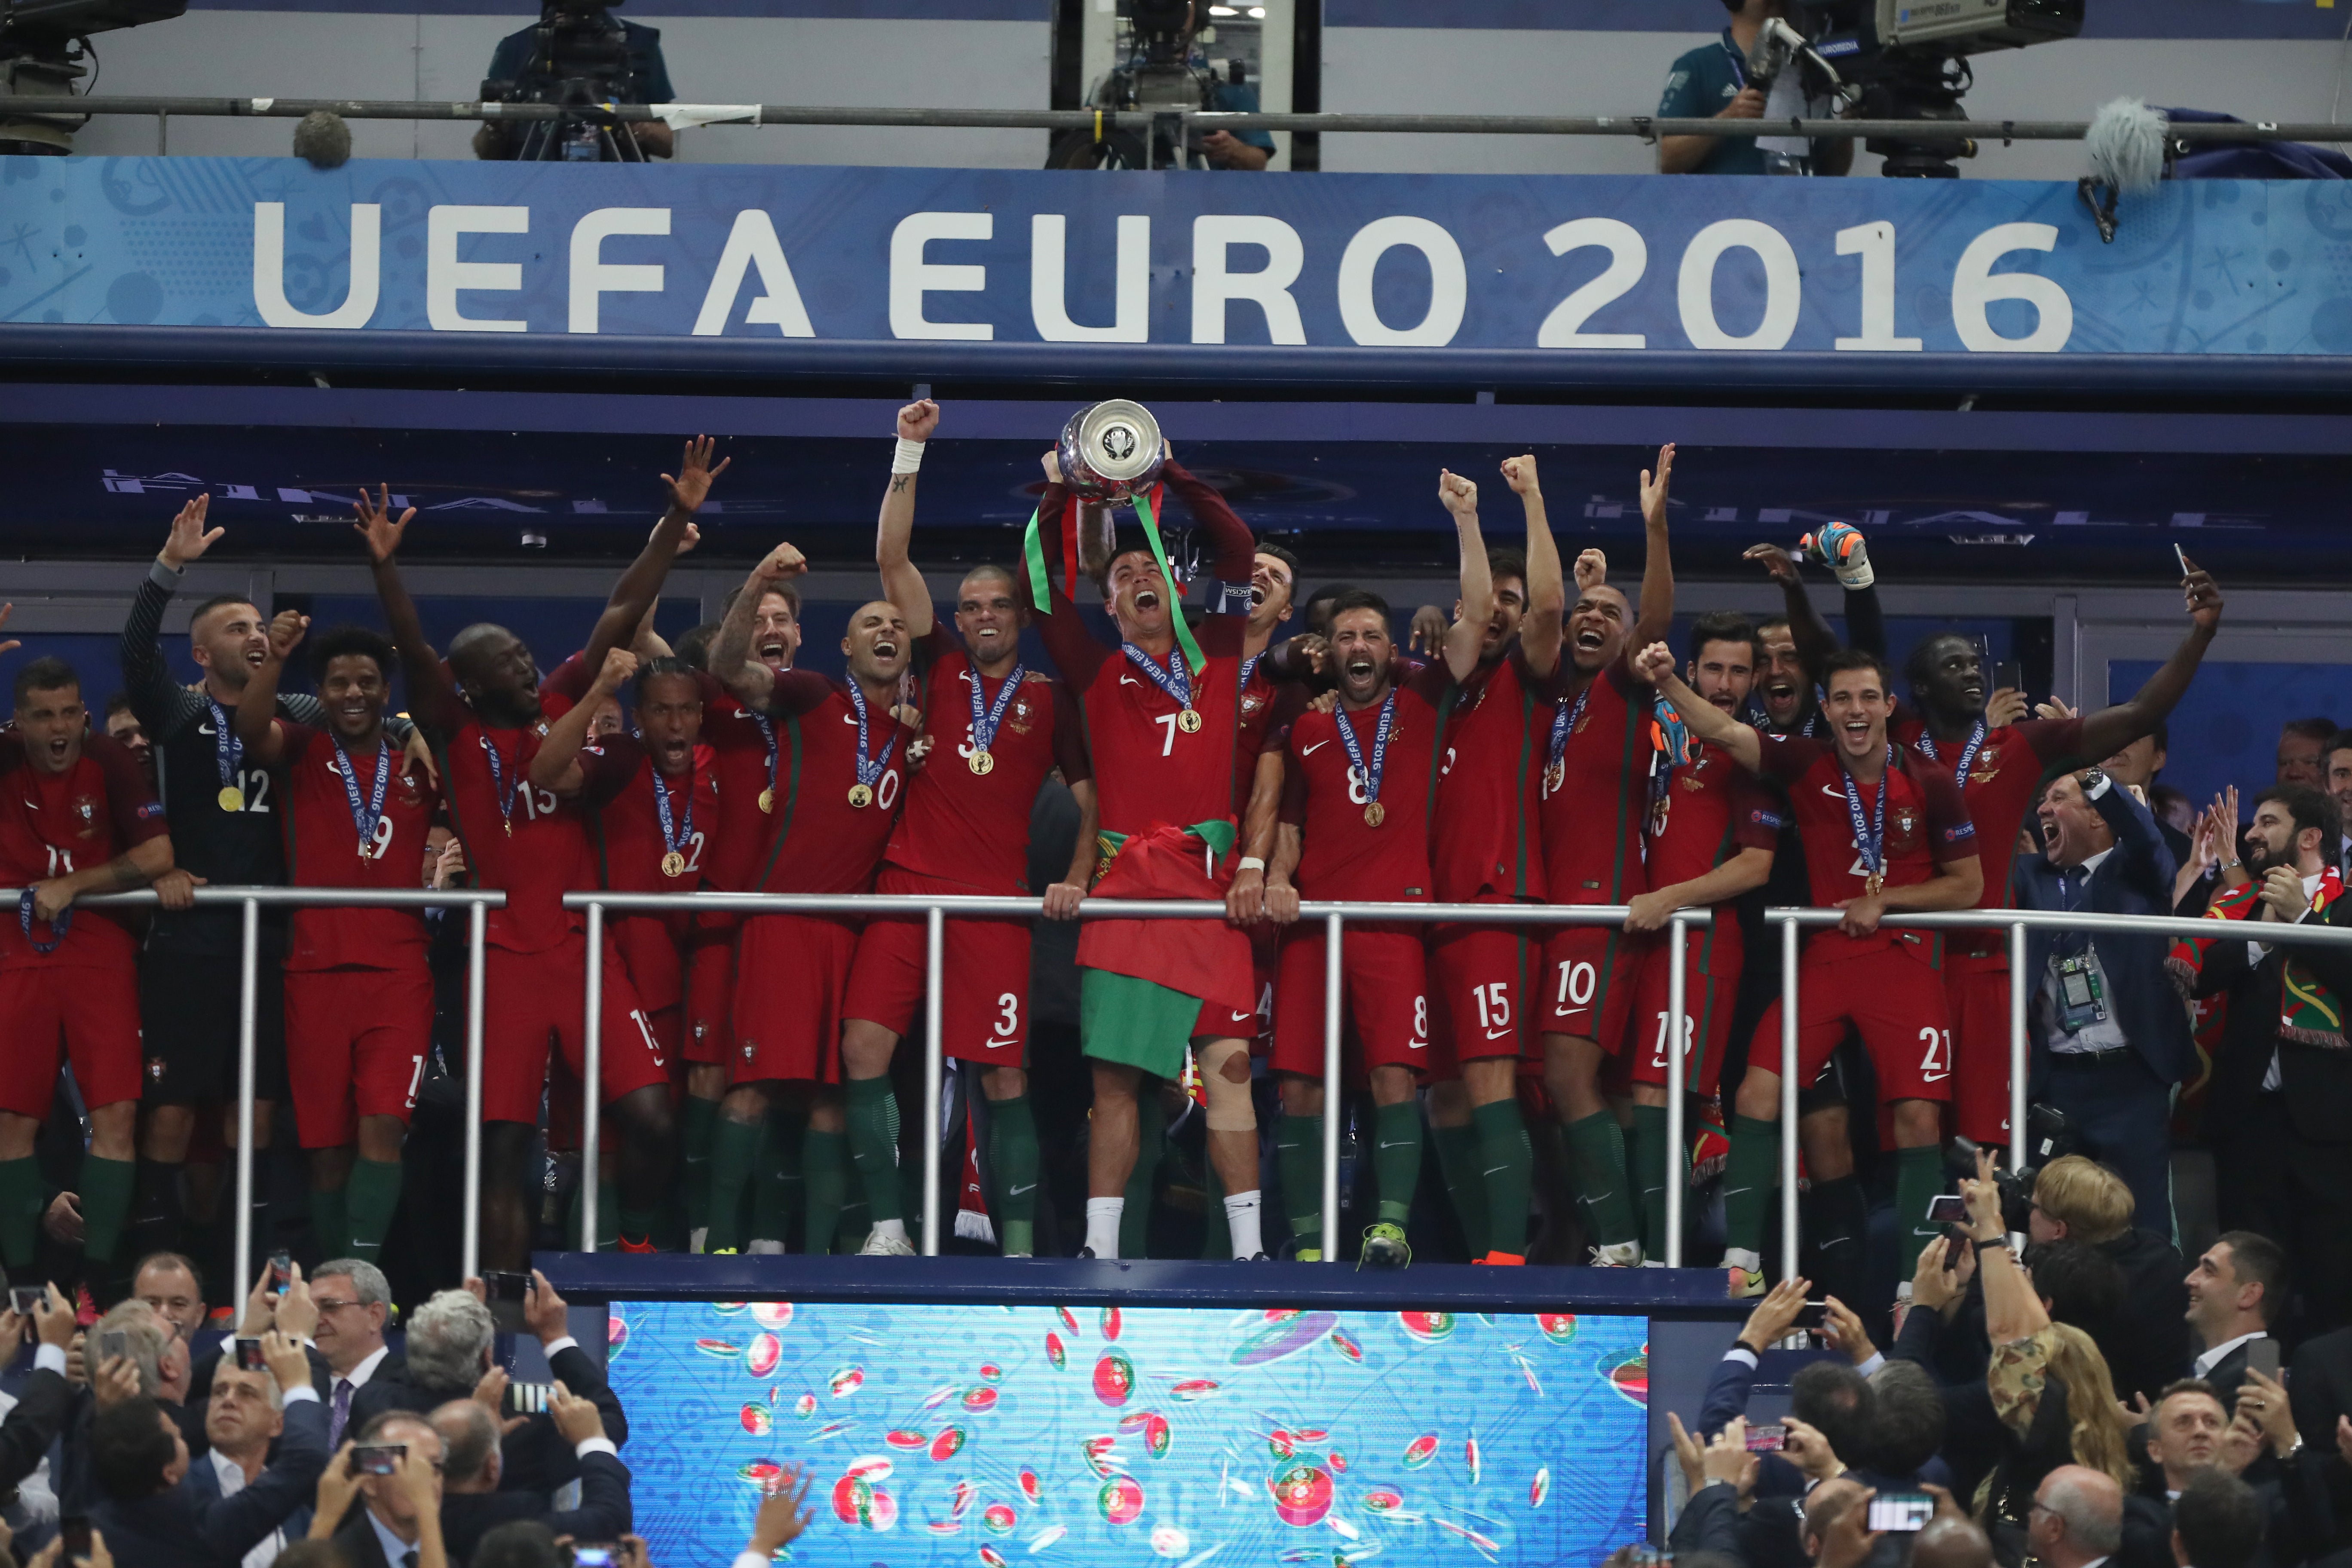 Euro 2016 winners Portugal face Hungary